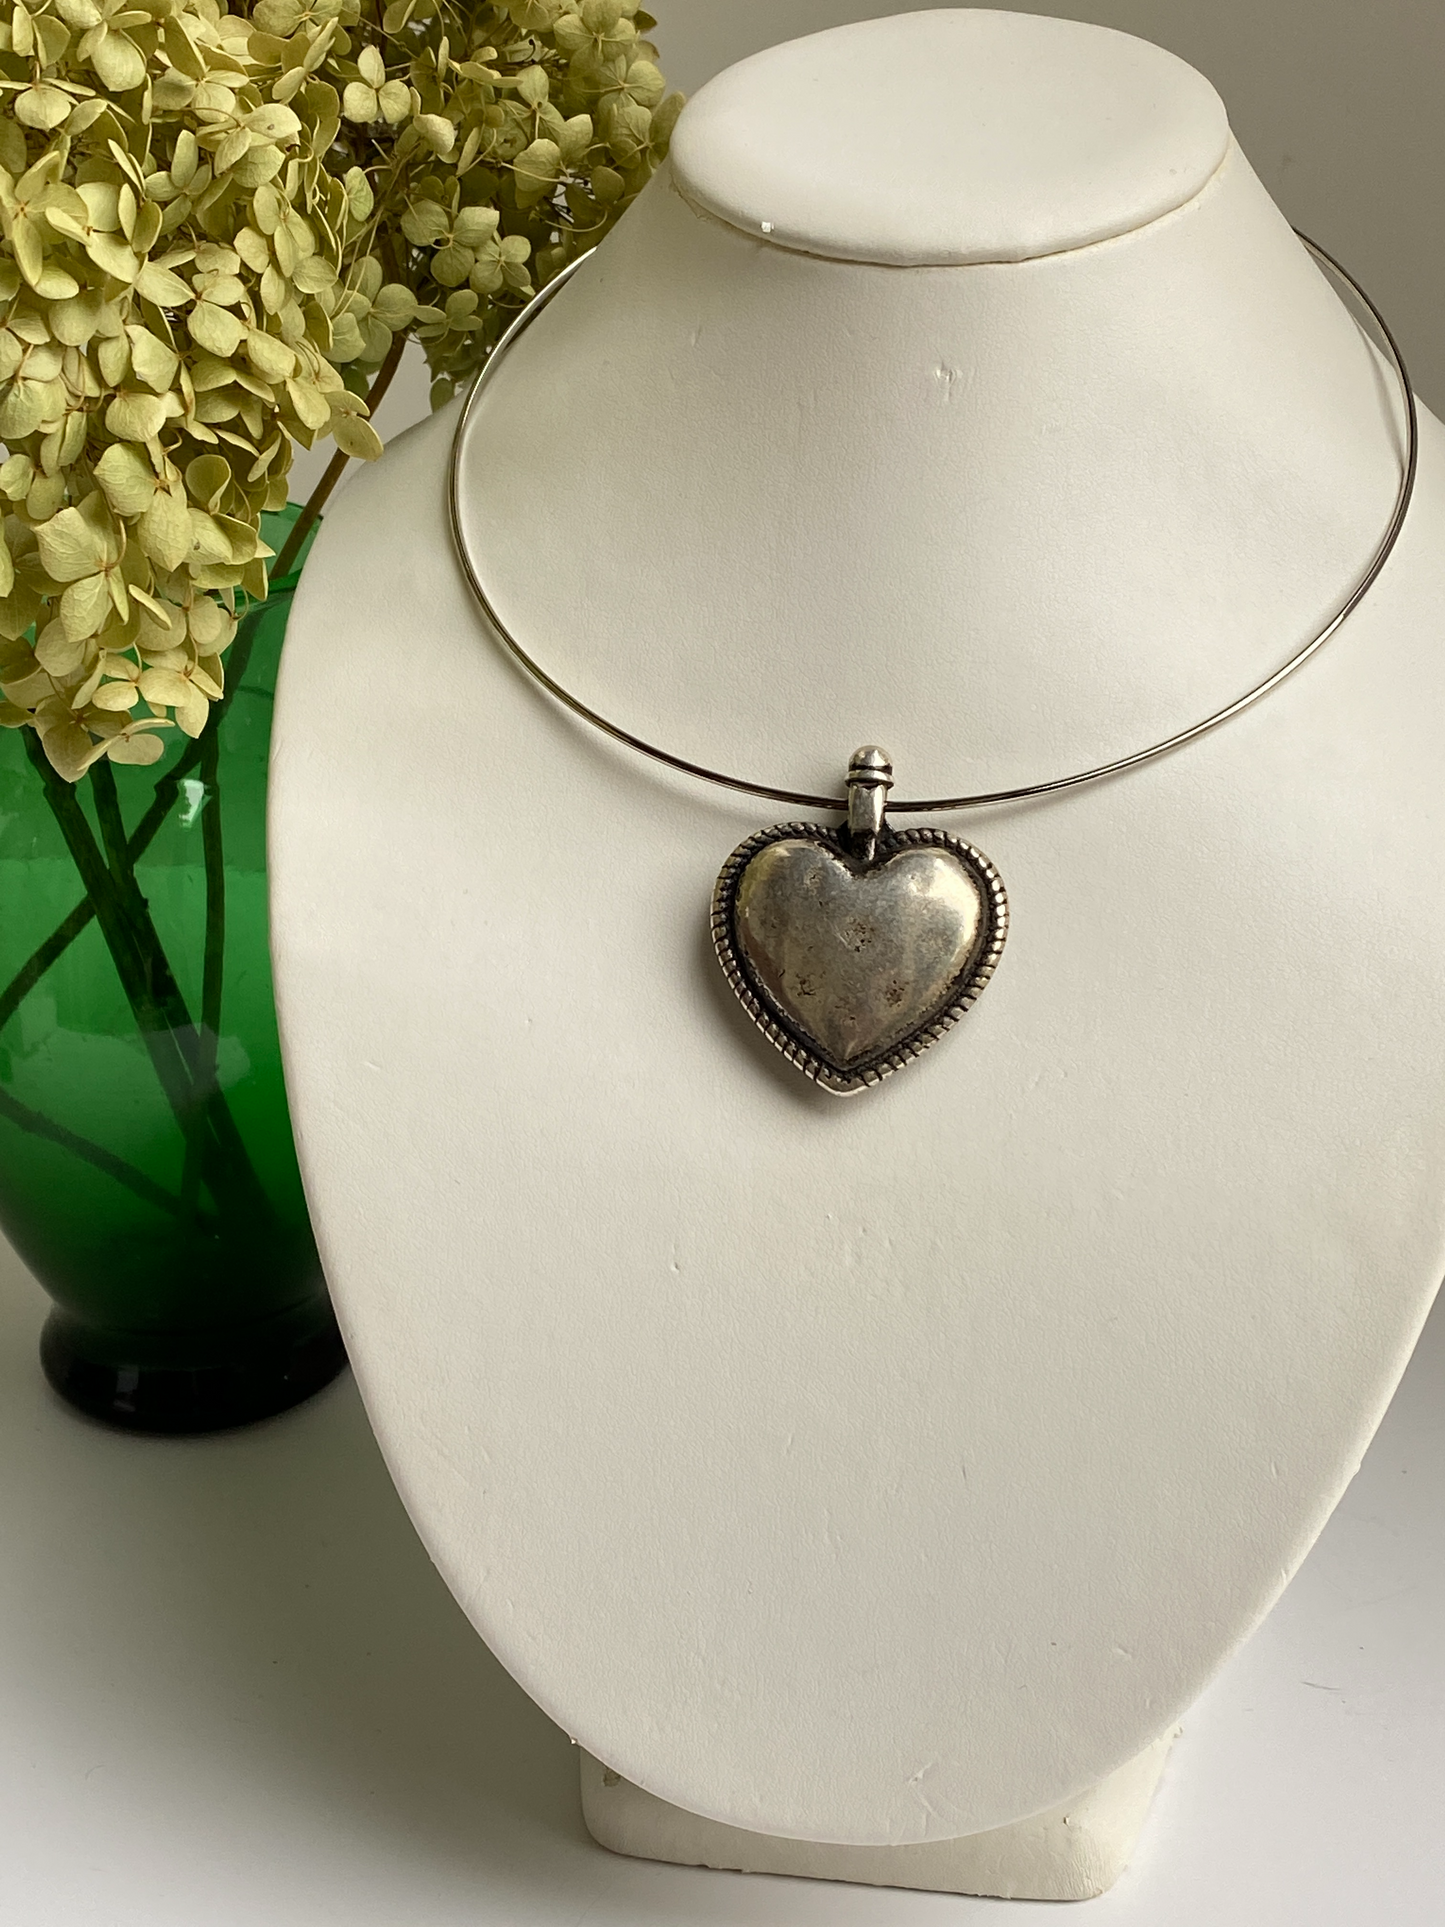 Necklace, Neck-wire, Silver, Heart Pendant, Valentine Gift